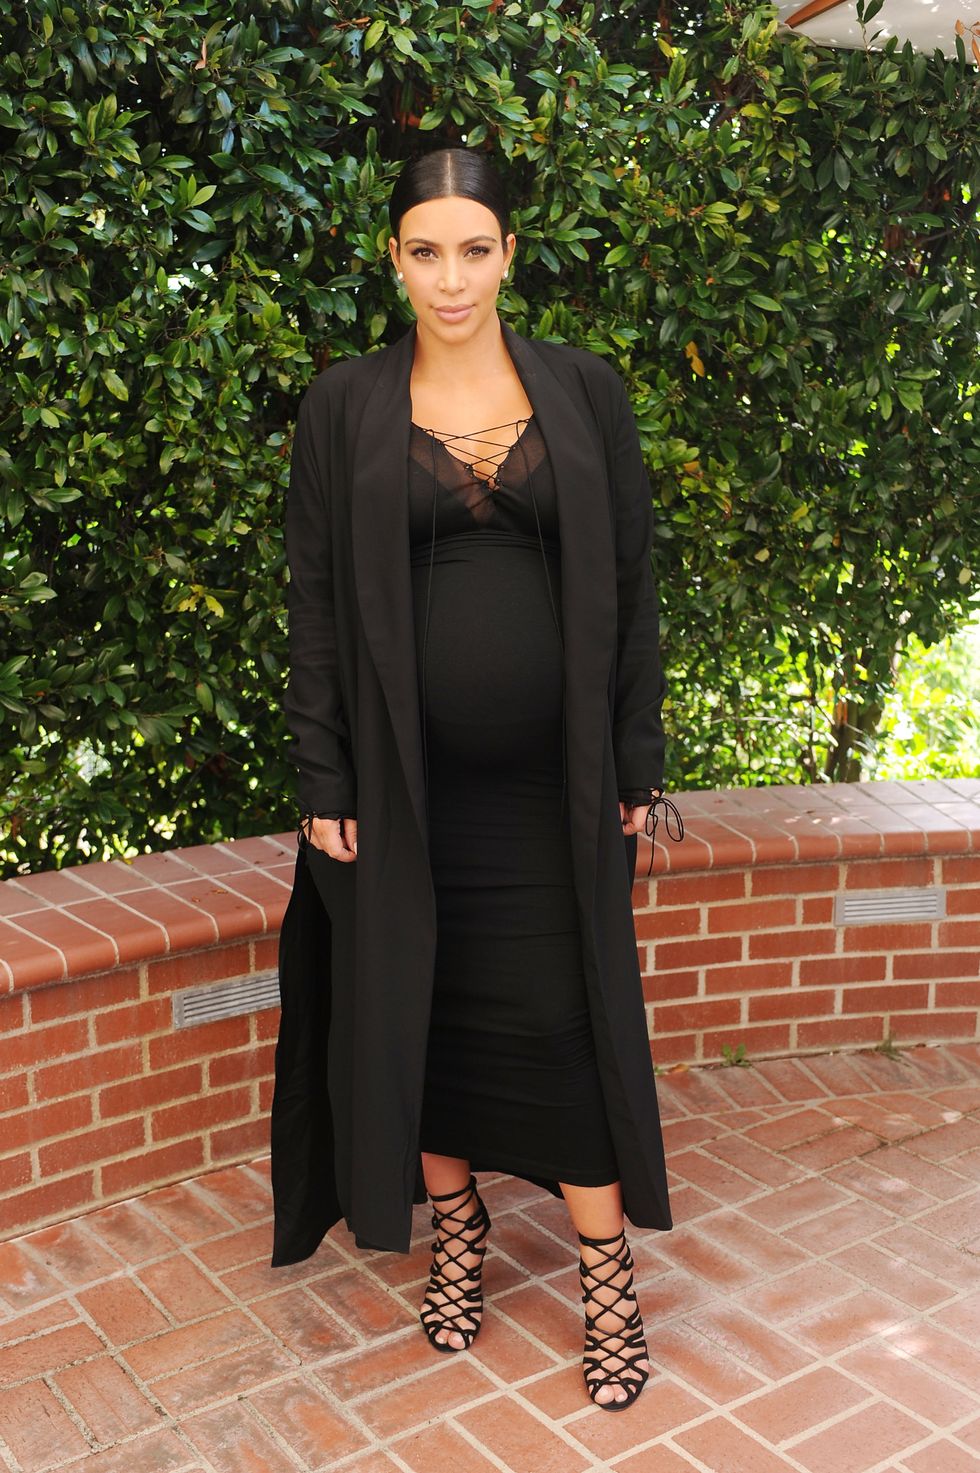 Kim Kardashian wearing black lace up dress